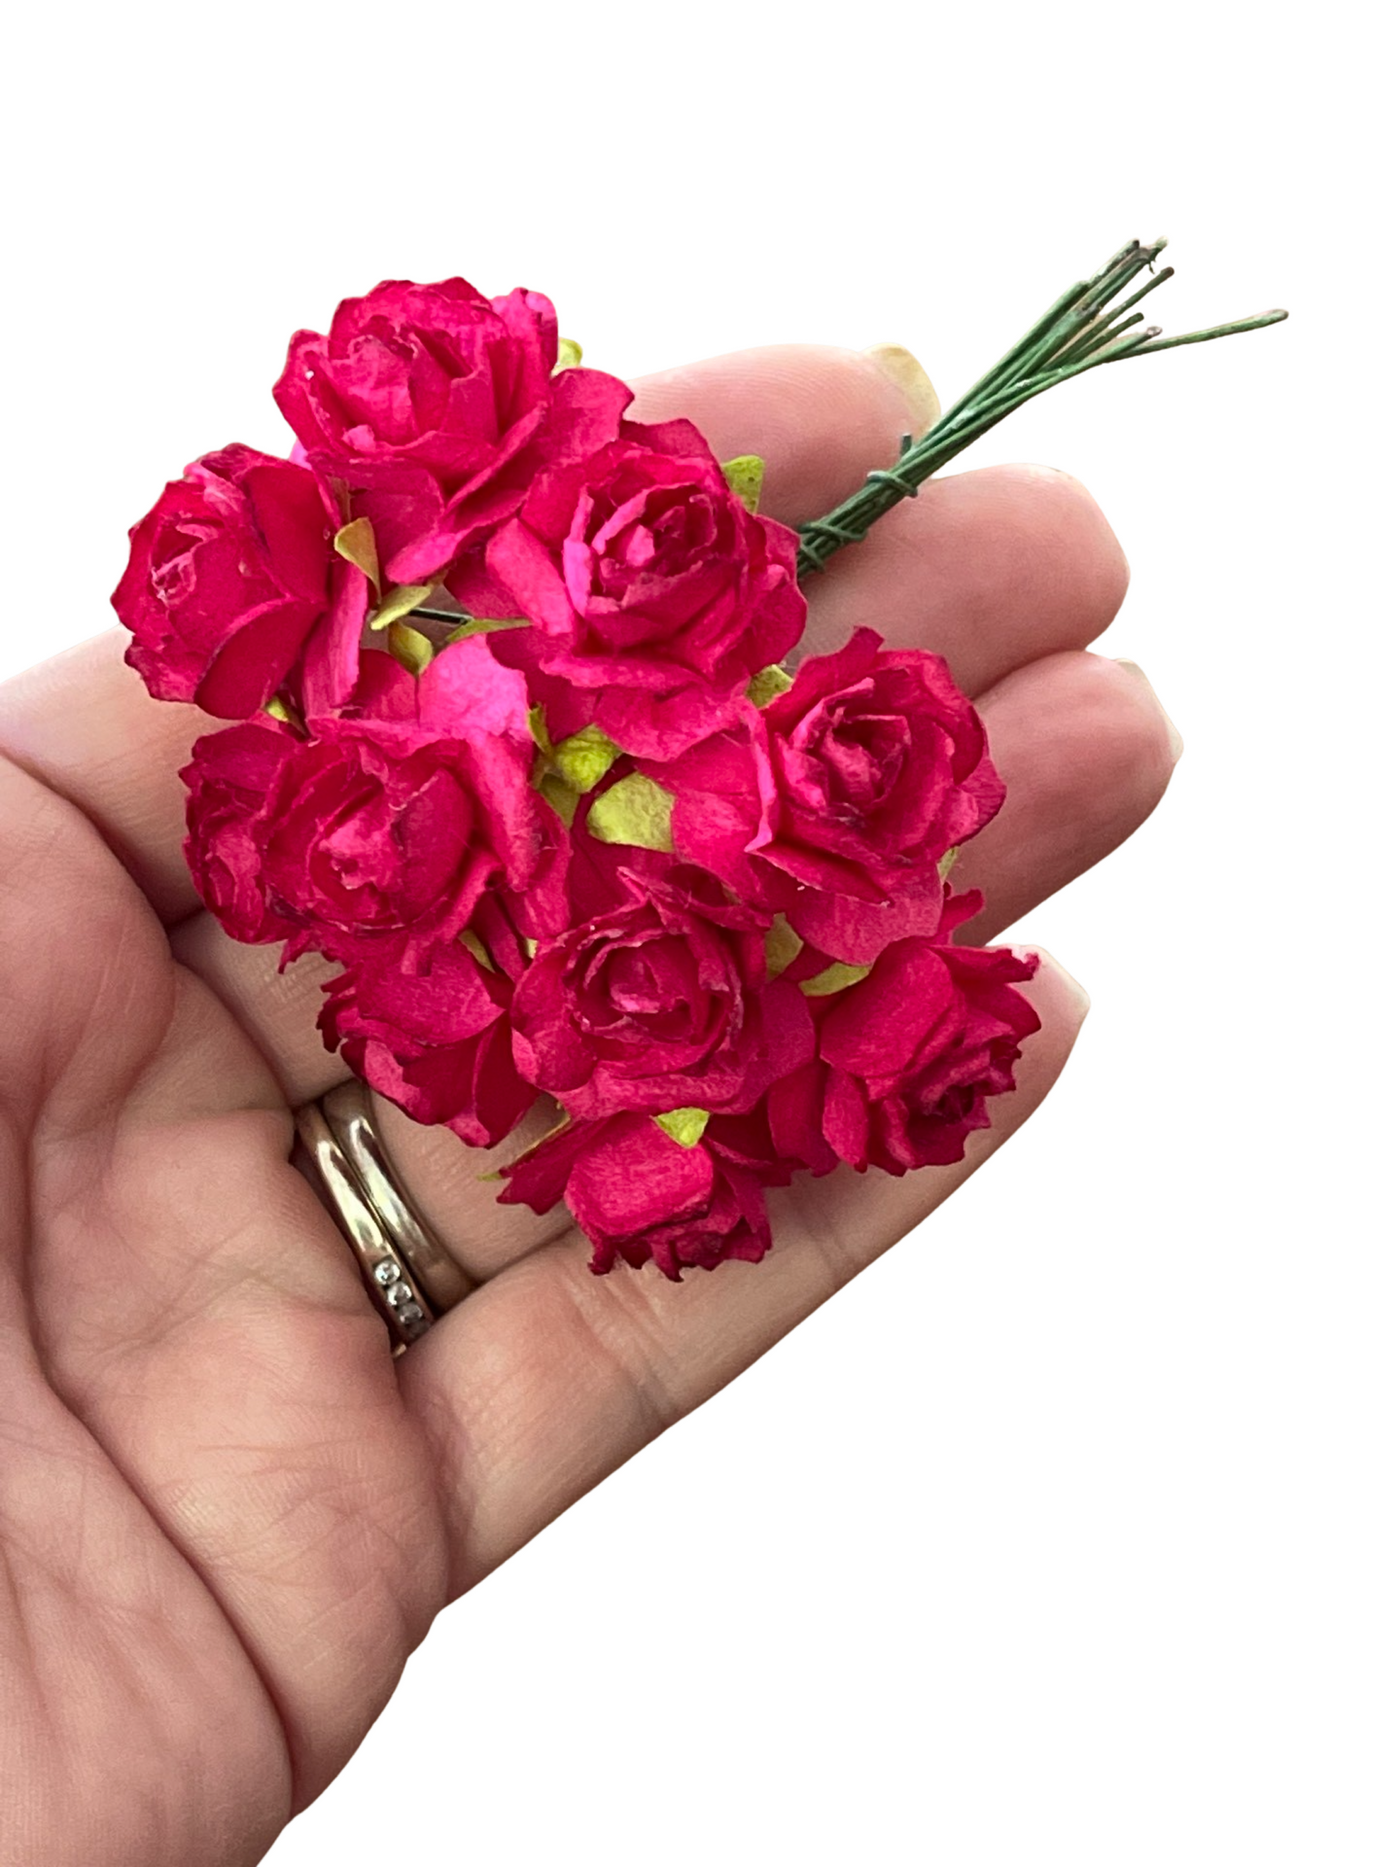 10 Pcs - Mulberry Paper Flowers - 2cm Tea Roses - Hot Pink